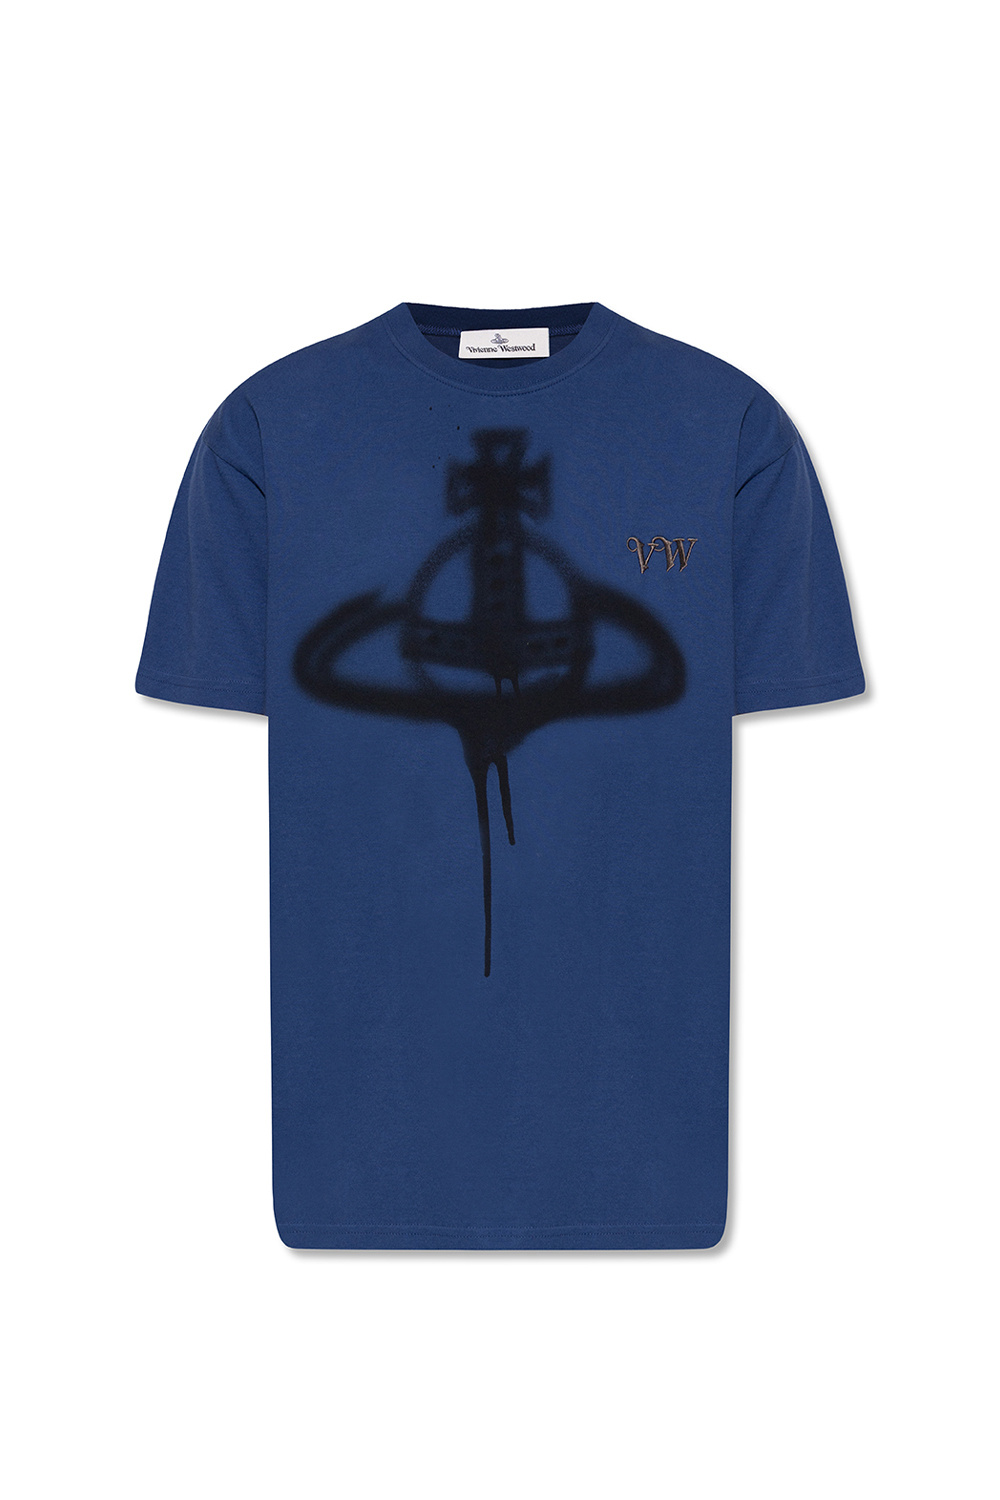 Vivienne Westwood ssense t shirt clothing applique fog boxy t shirt fear of god essentials dark navy